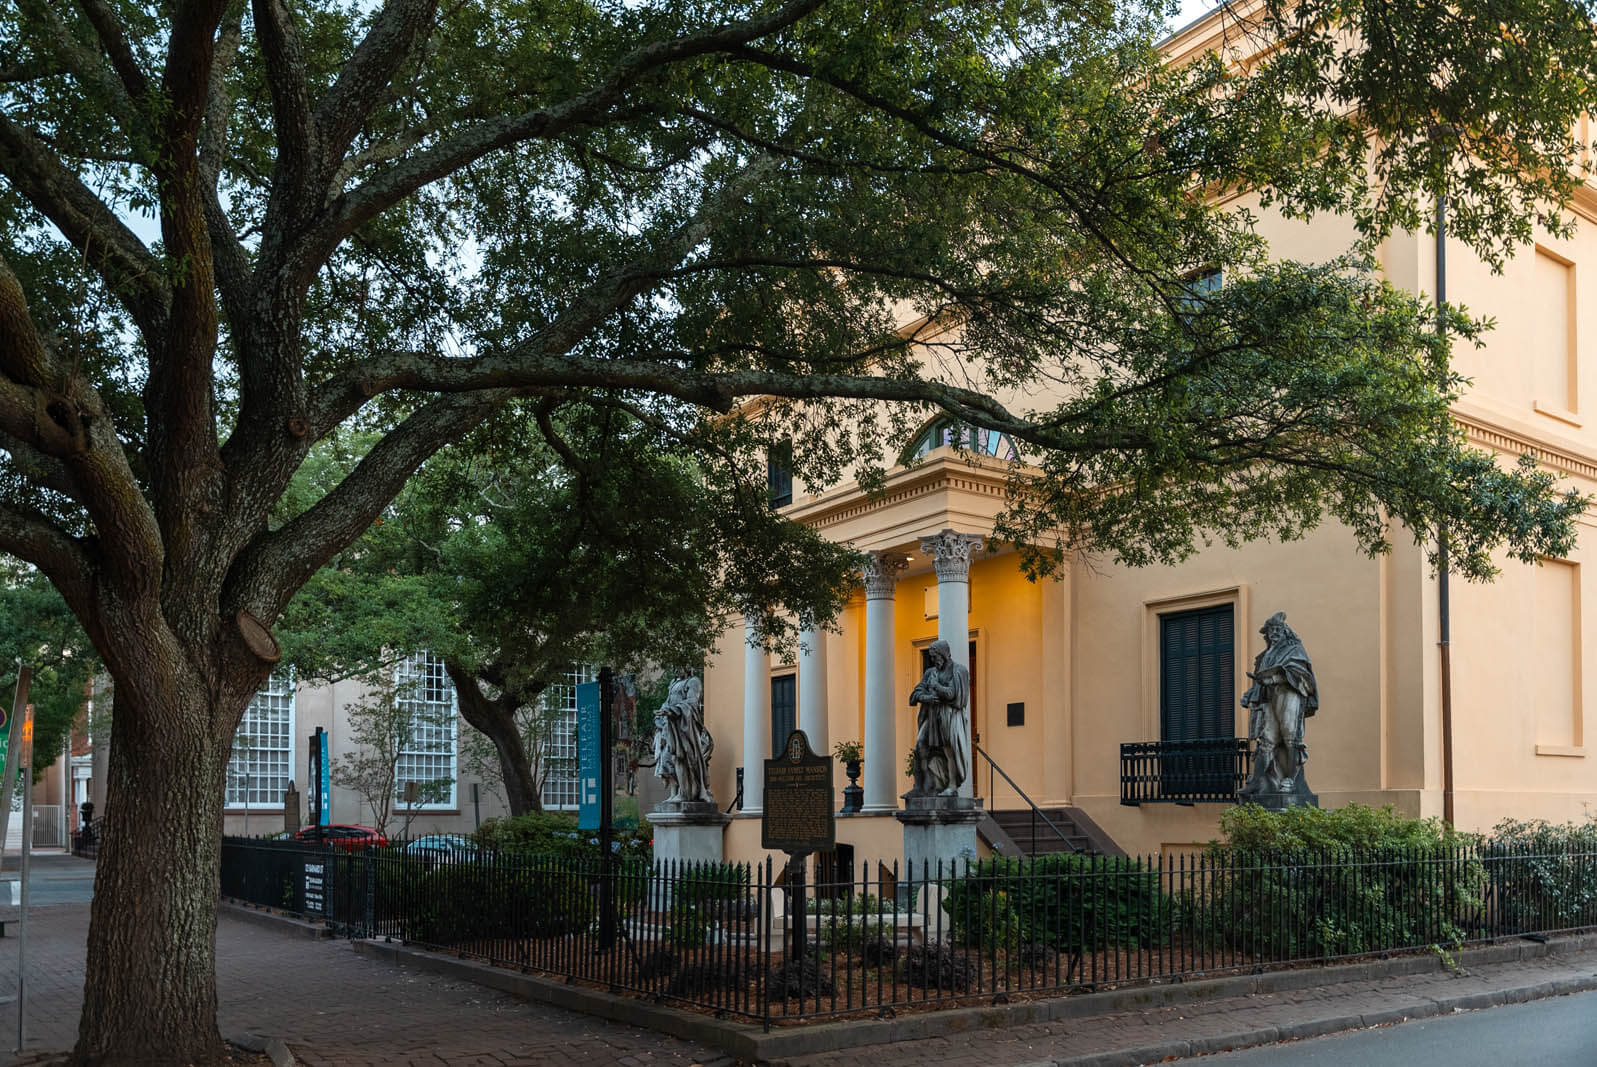 Statues outside the Telfair Academy in Savannah Georgia